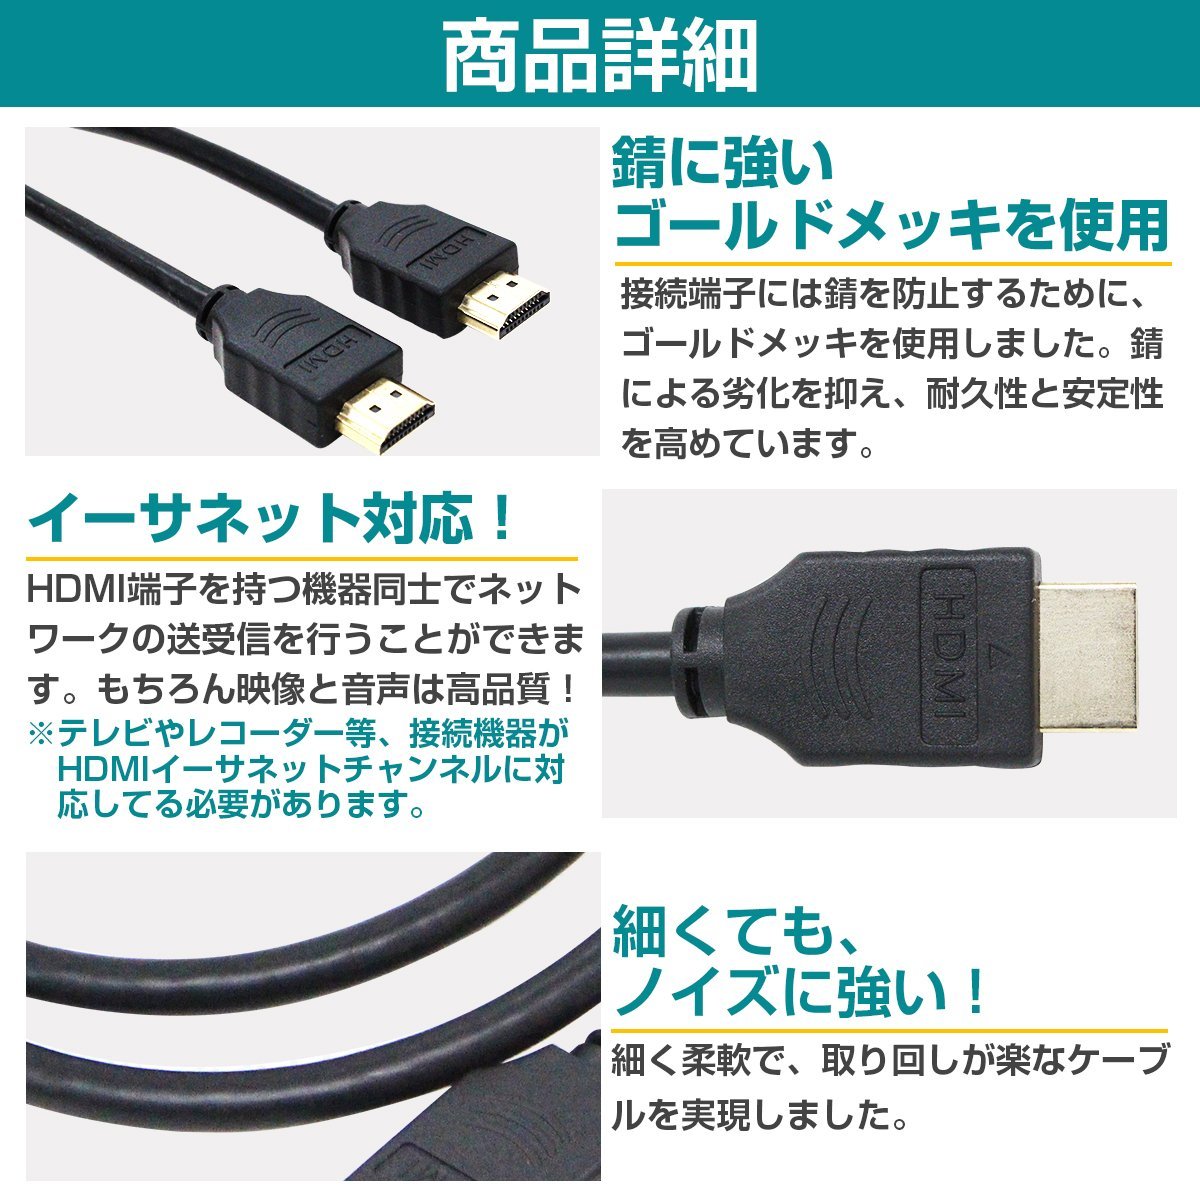 HDMIケーブル★高画質 ハイスピード モニター hdmi テレビ パソコン★